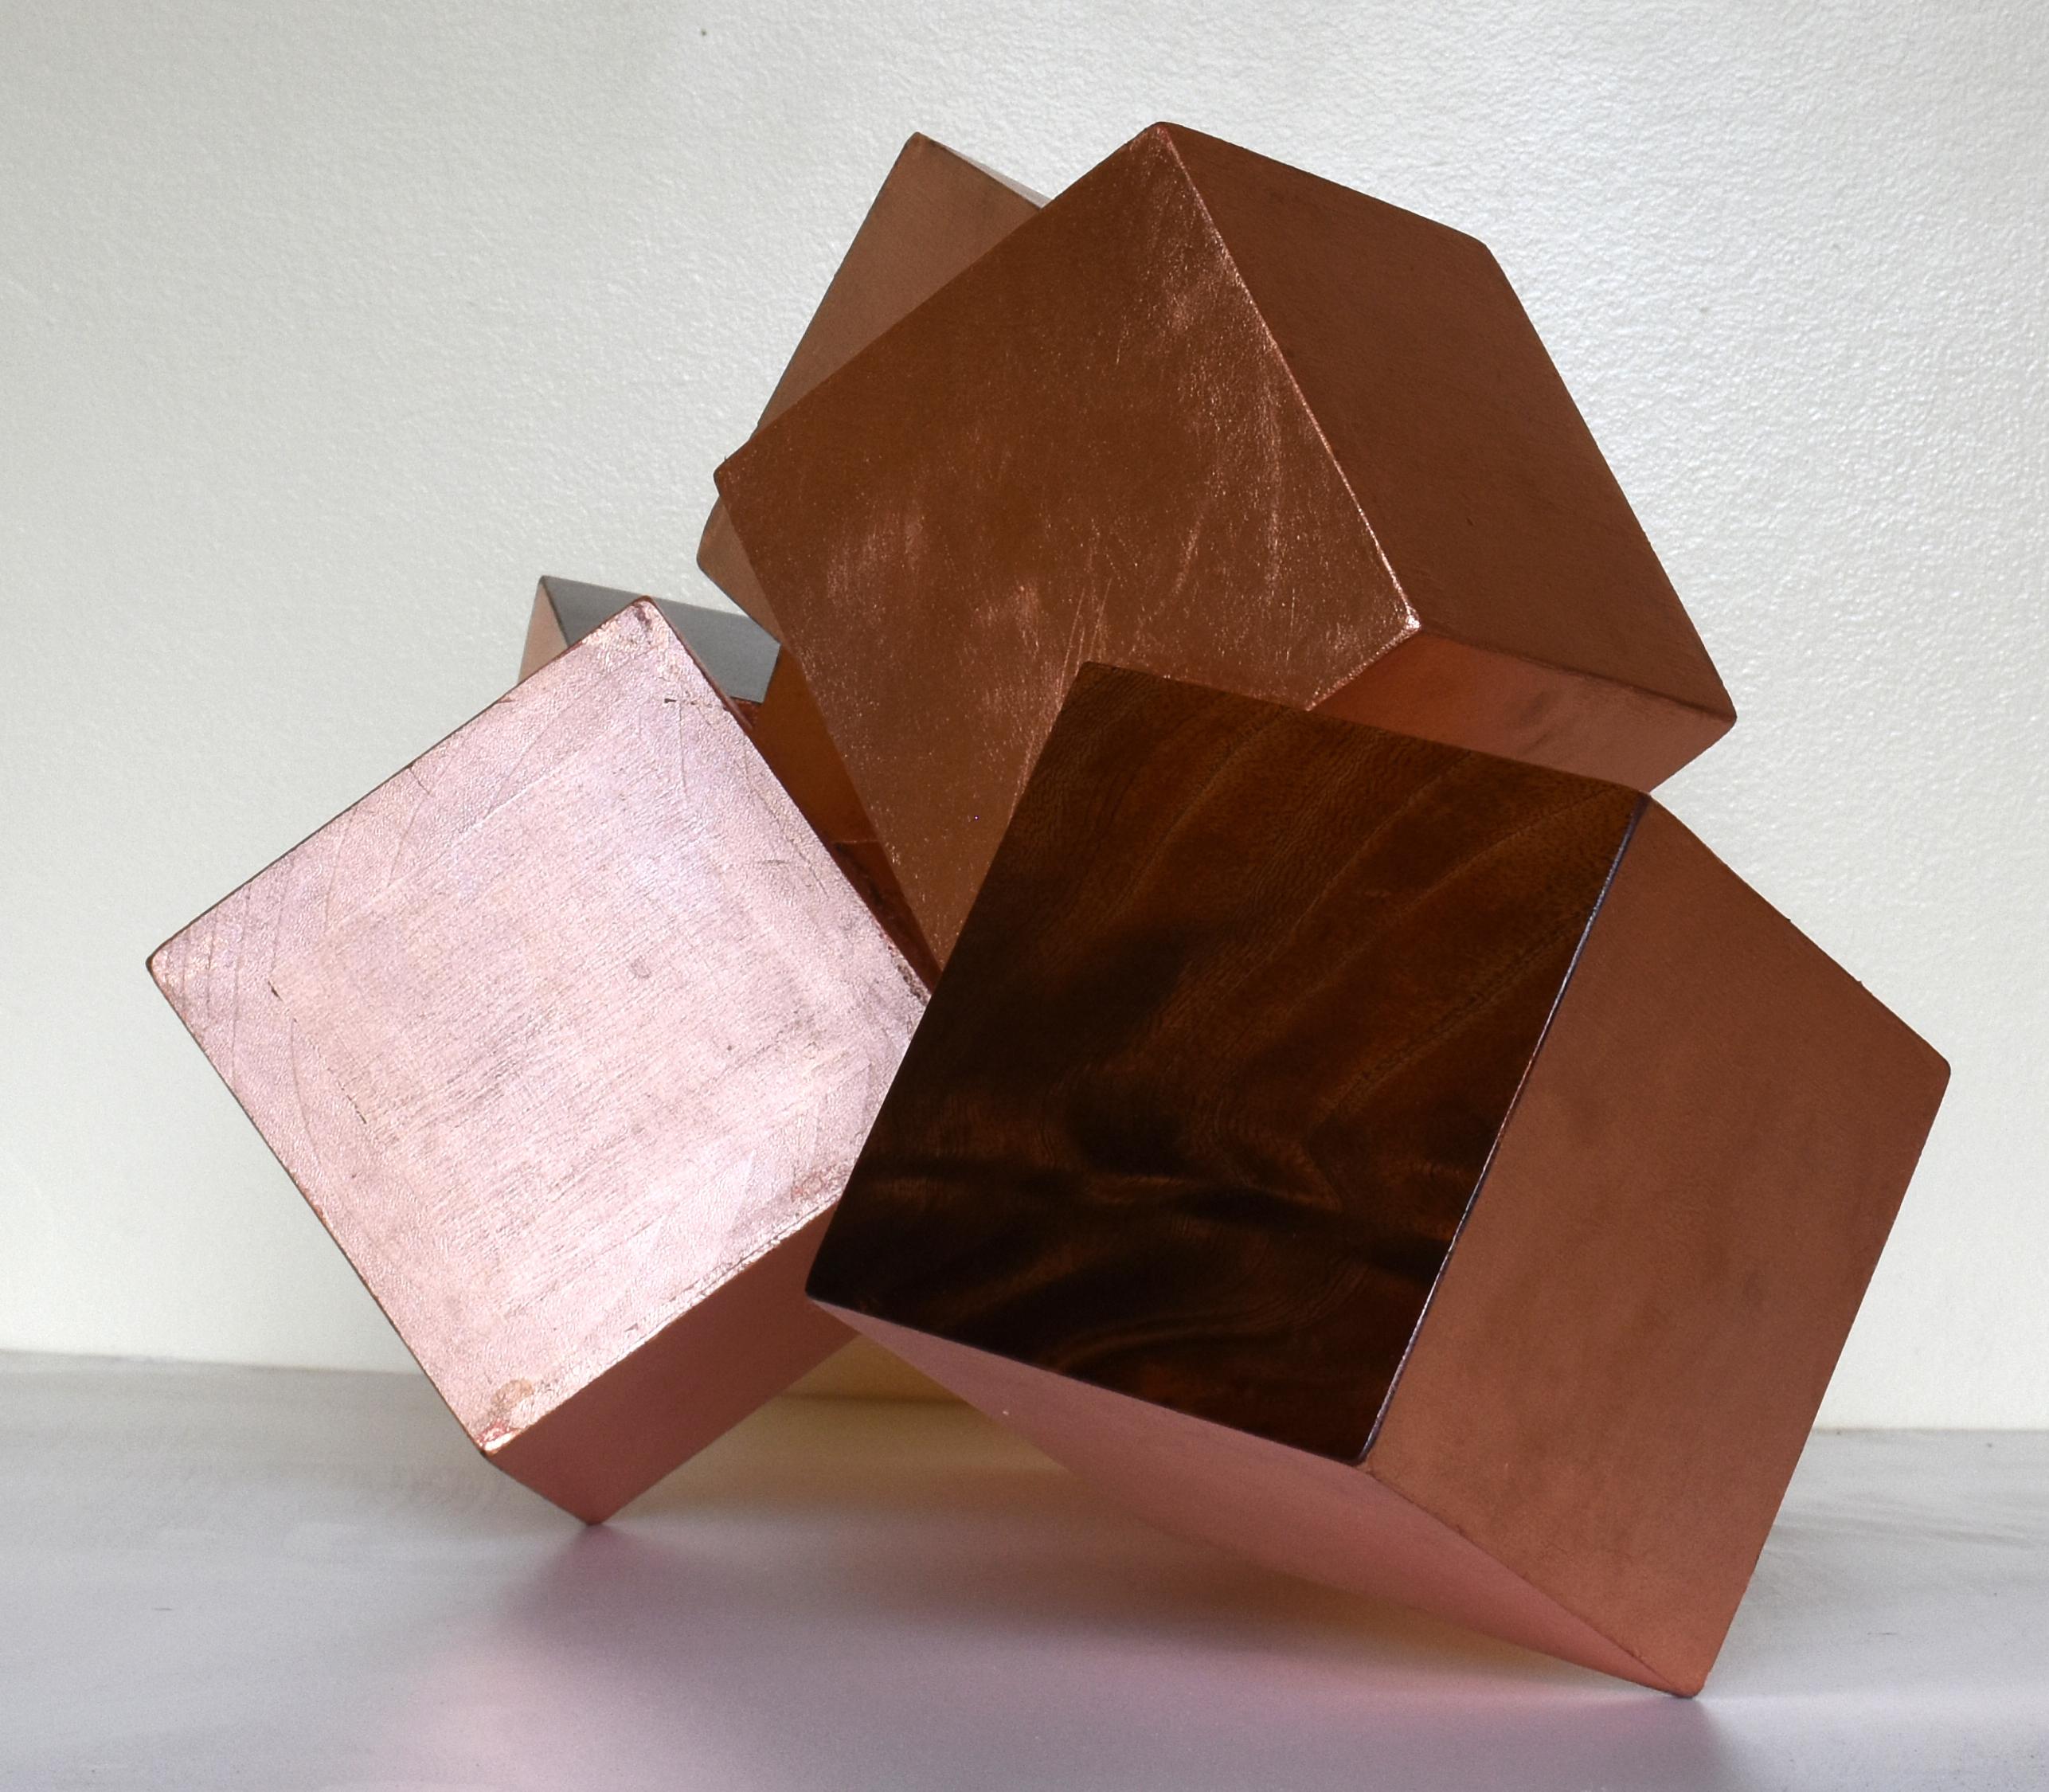 Copper and Mahogany Pyrite (exotic wood, metallic, cubic, table top sculpture) 11